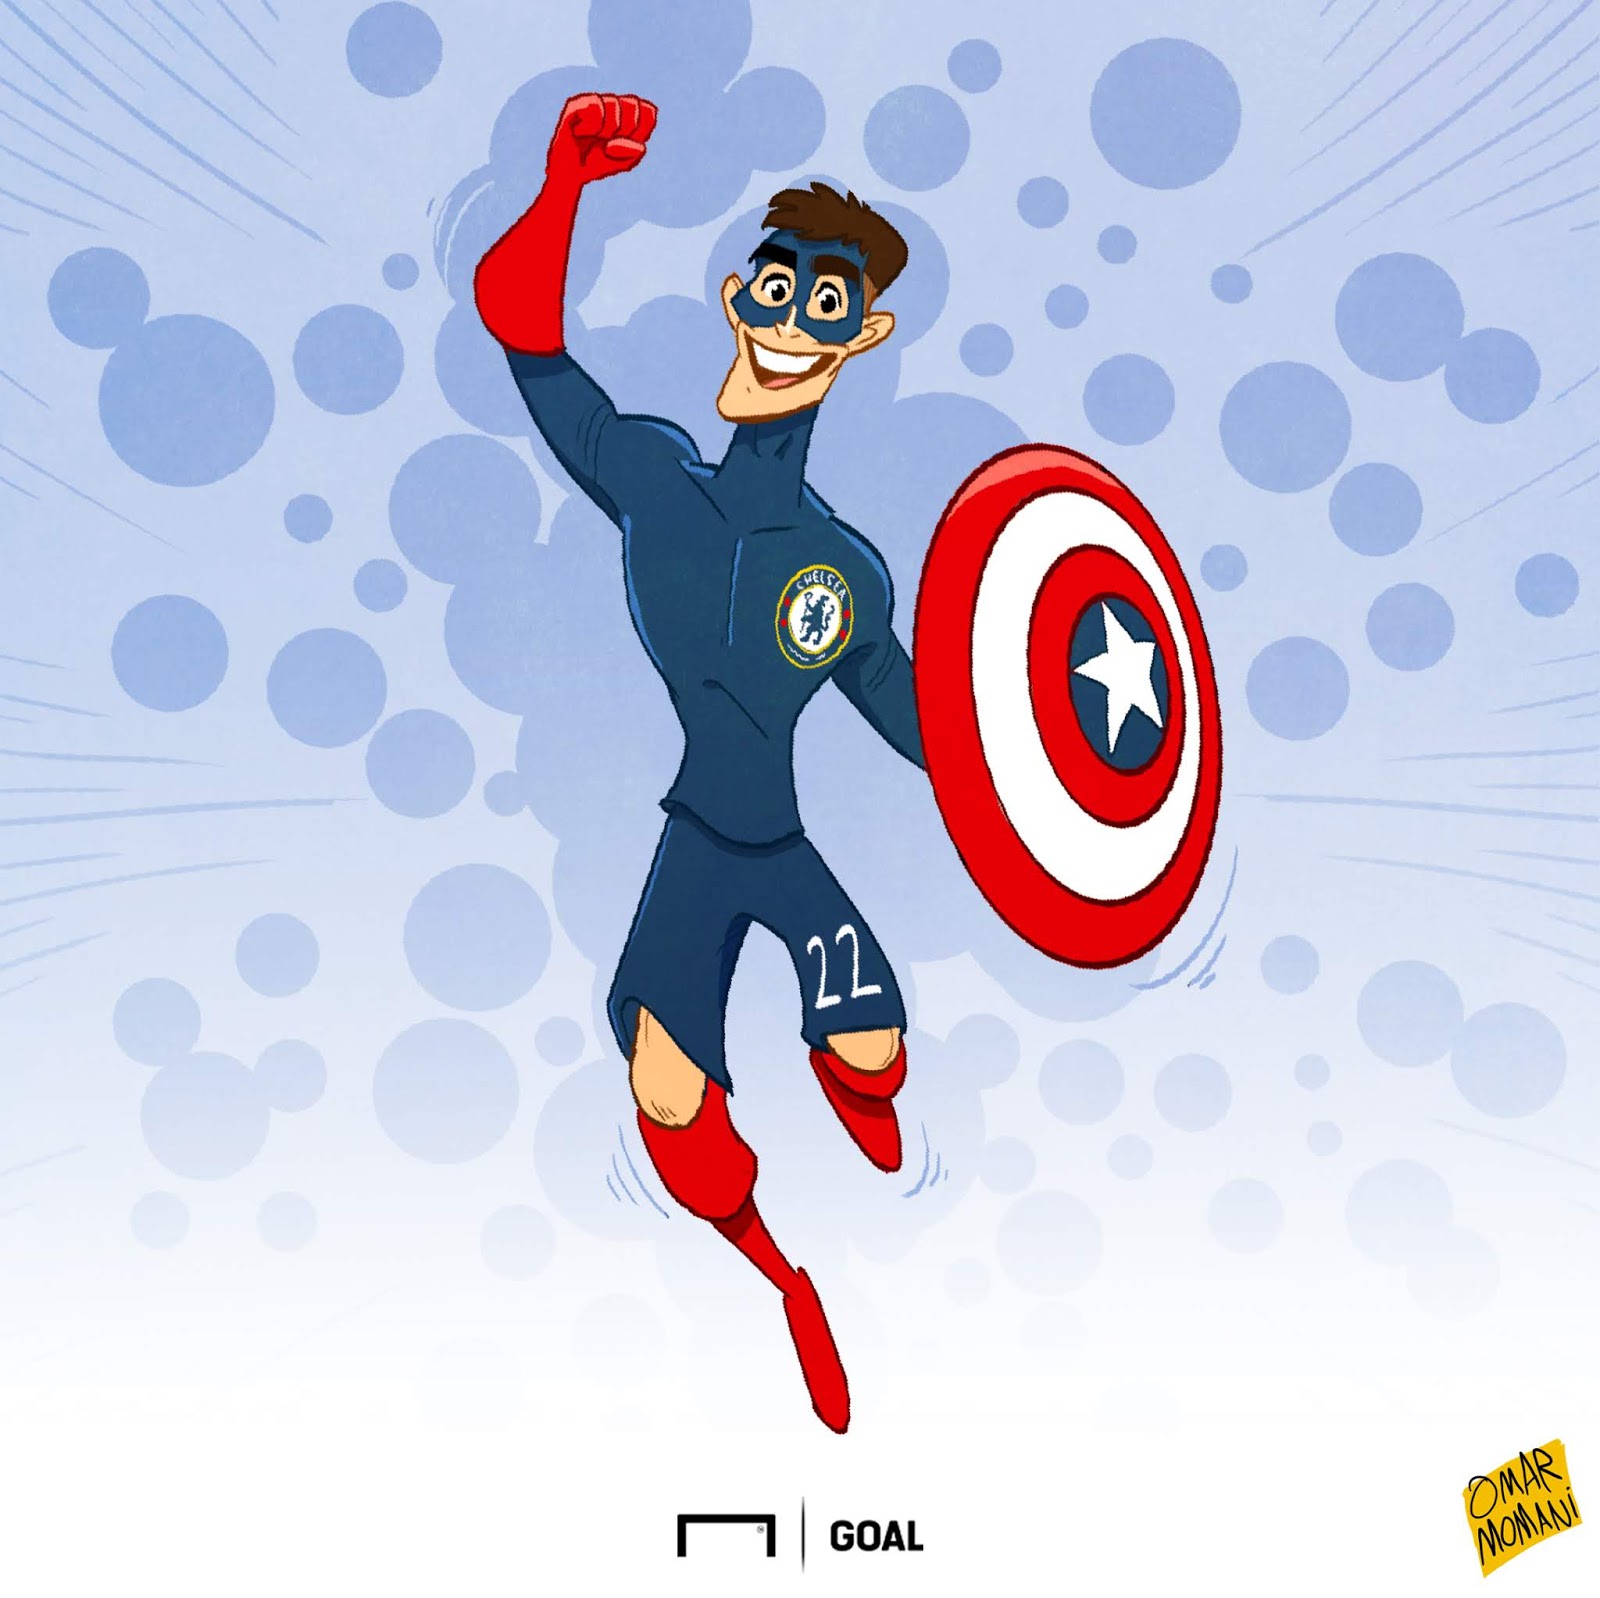 Omar Momani cartoons: Premier League, meet Captain America 😎